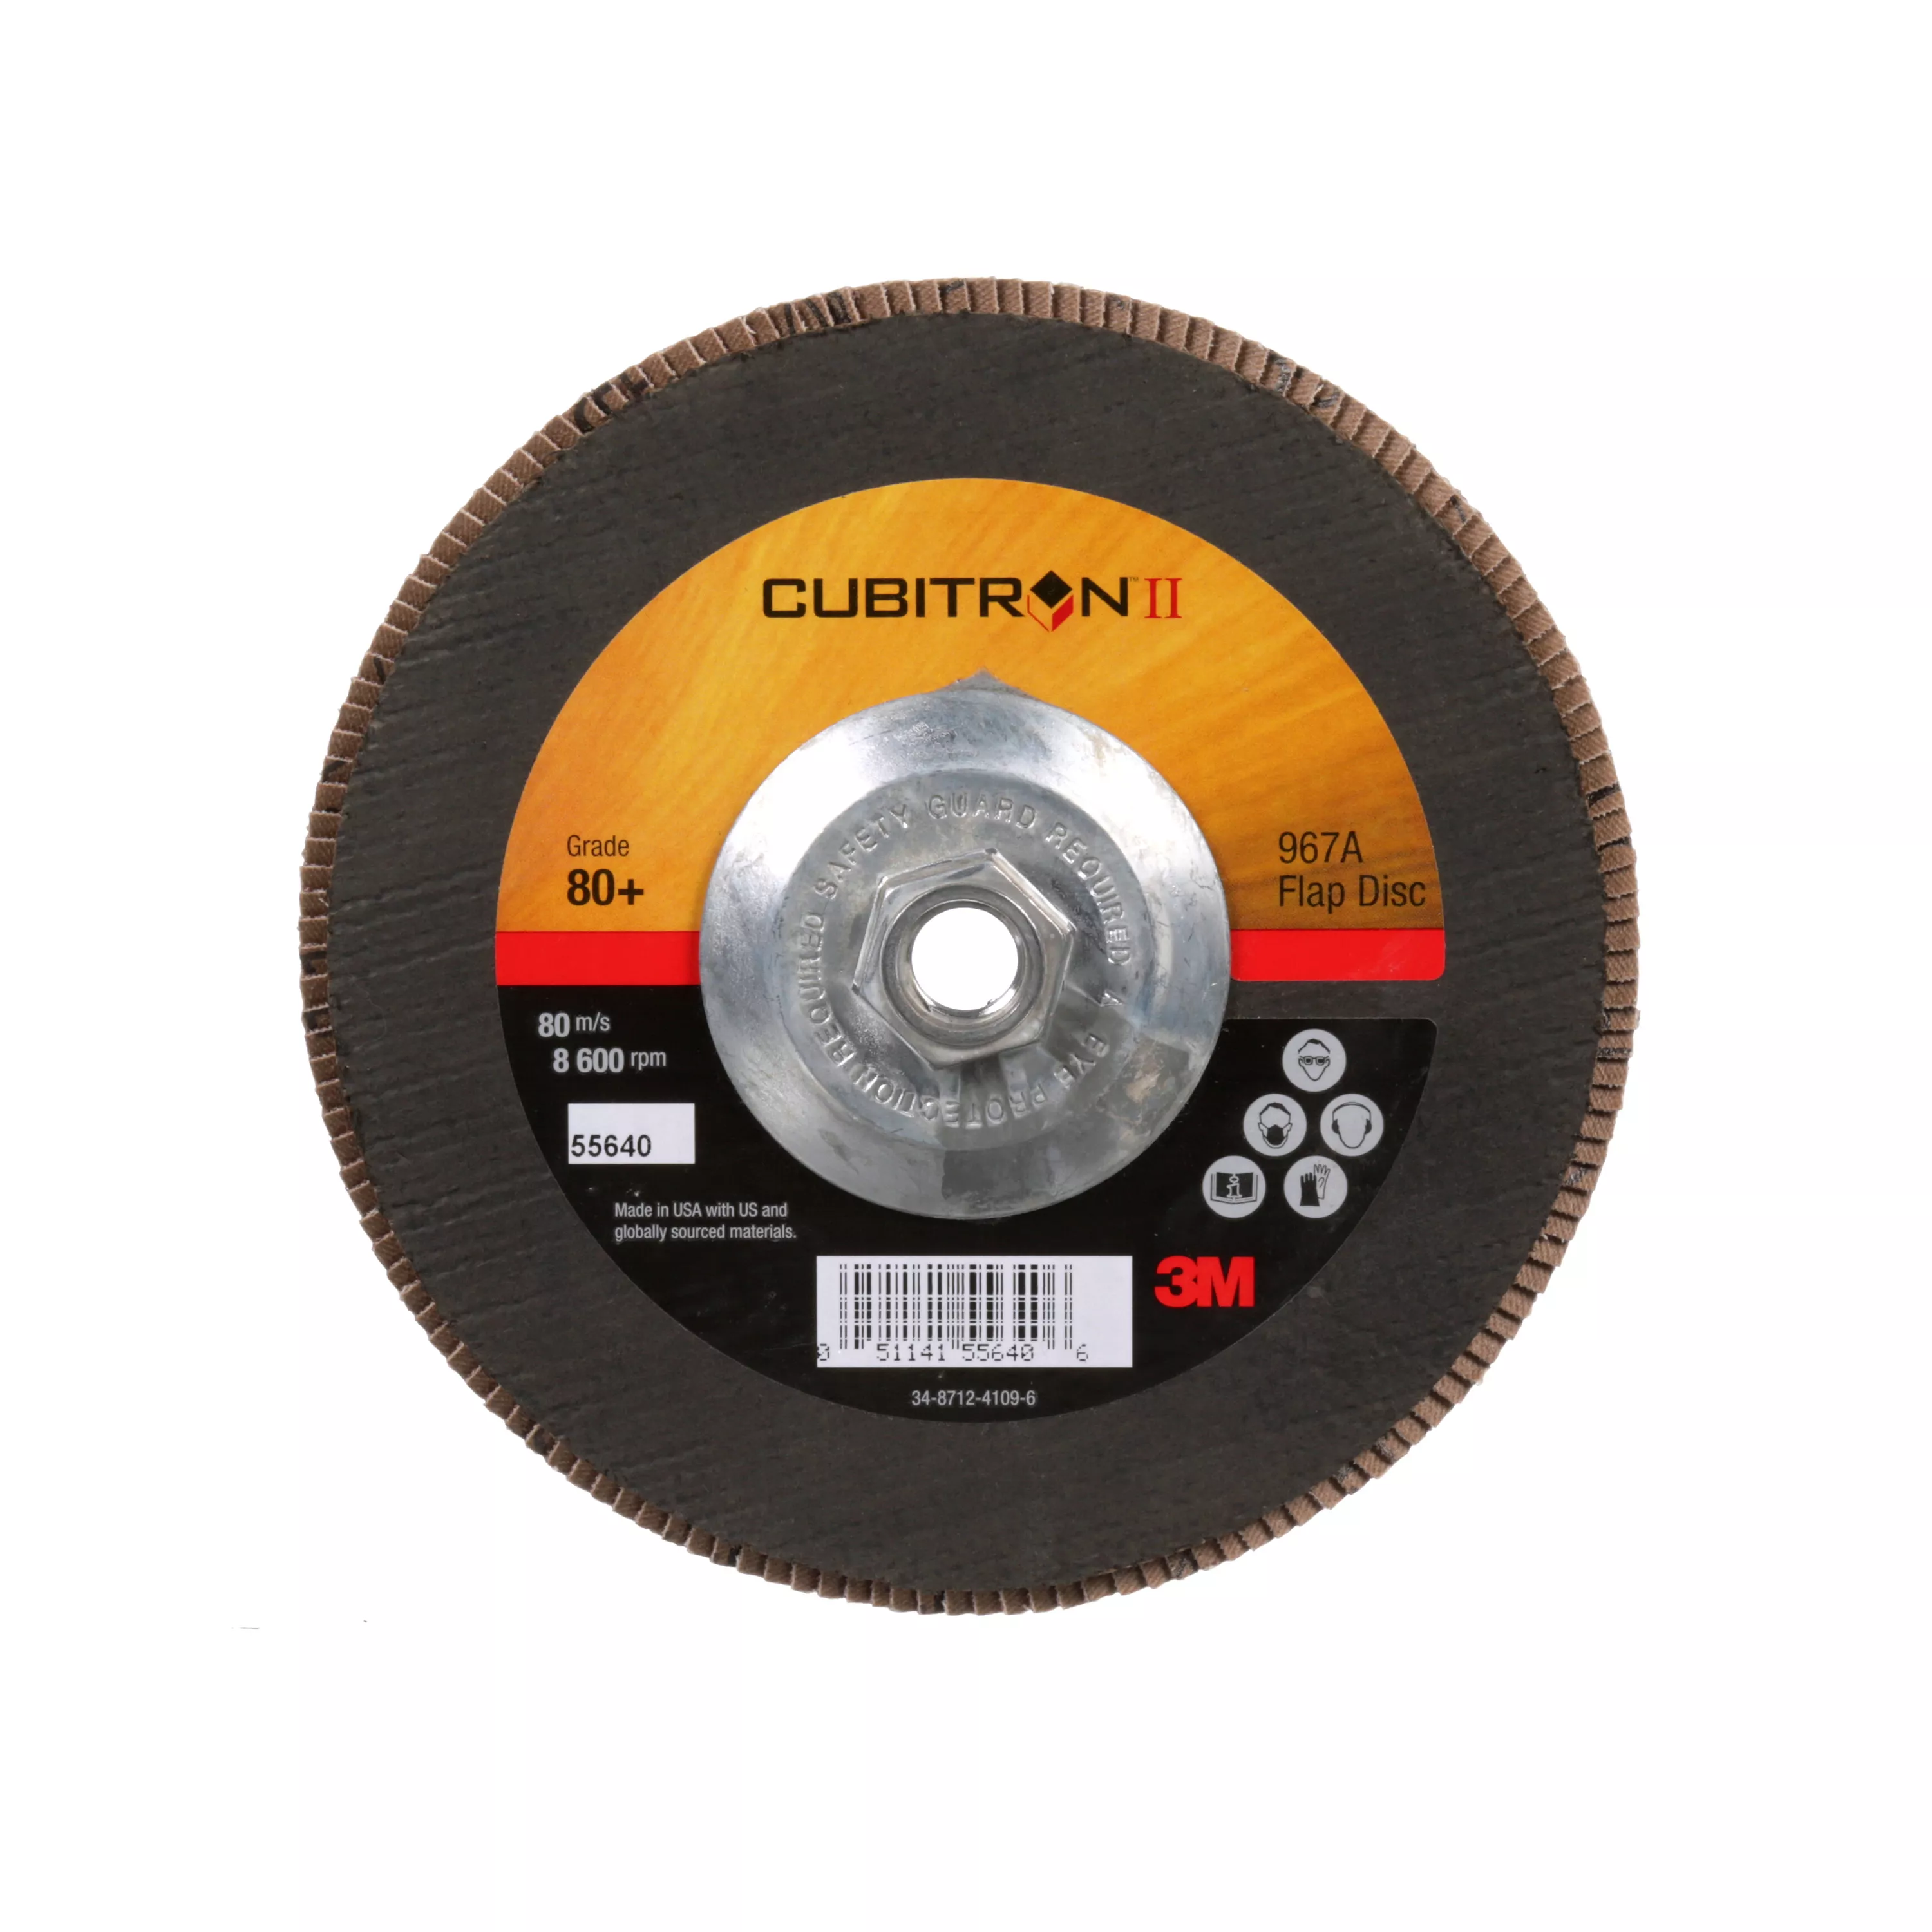 SKU 7010327063 | 3M™ Cubitron™ II Flap Disc 967A